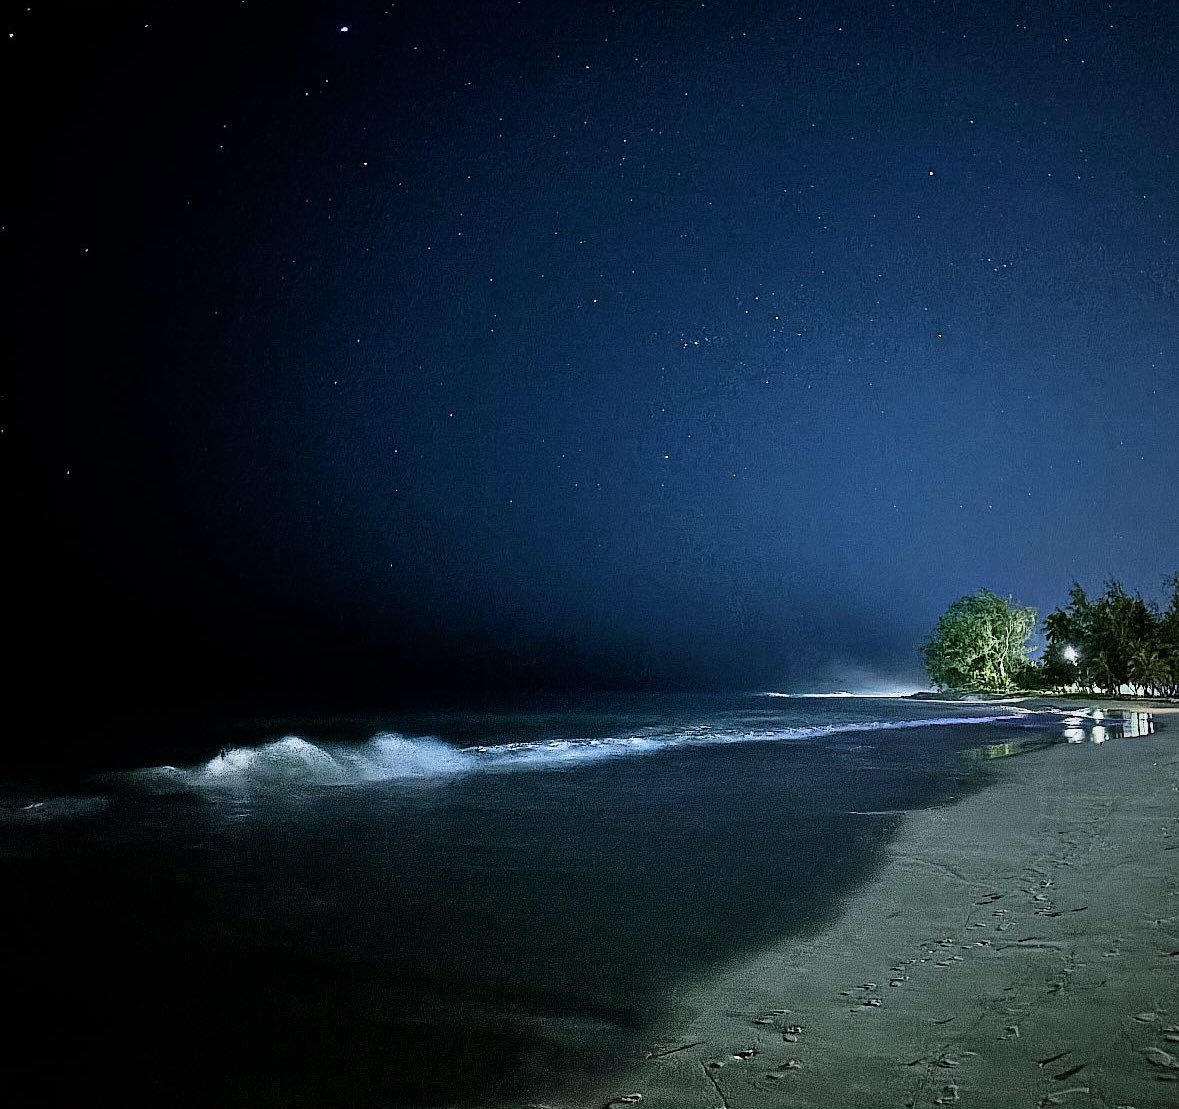 Last nights starry sky ⭐️ #Stars #Barbados